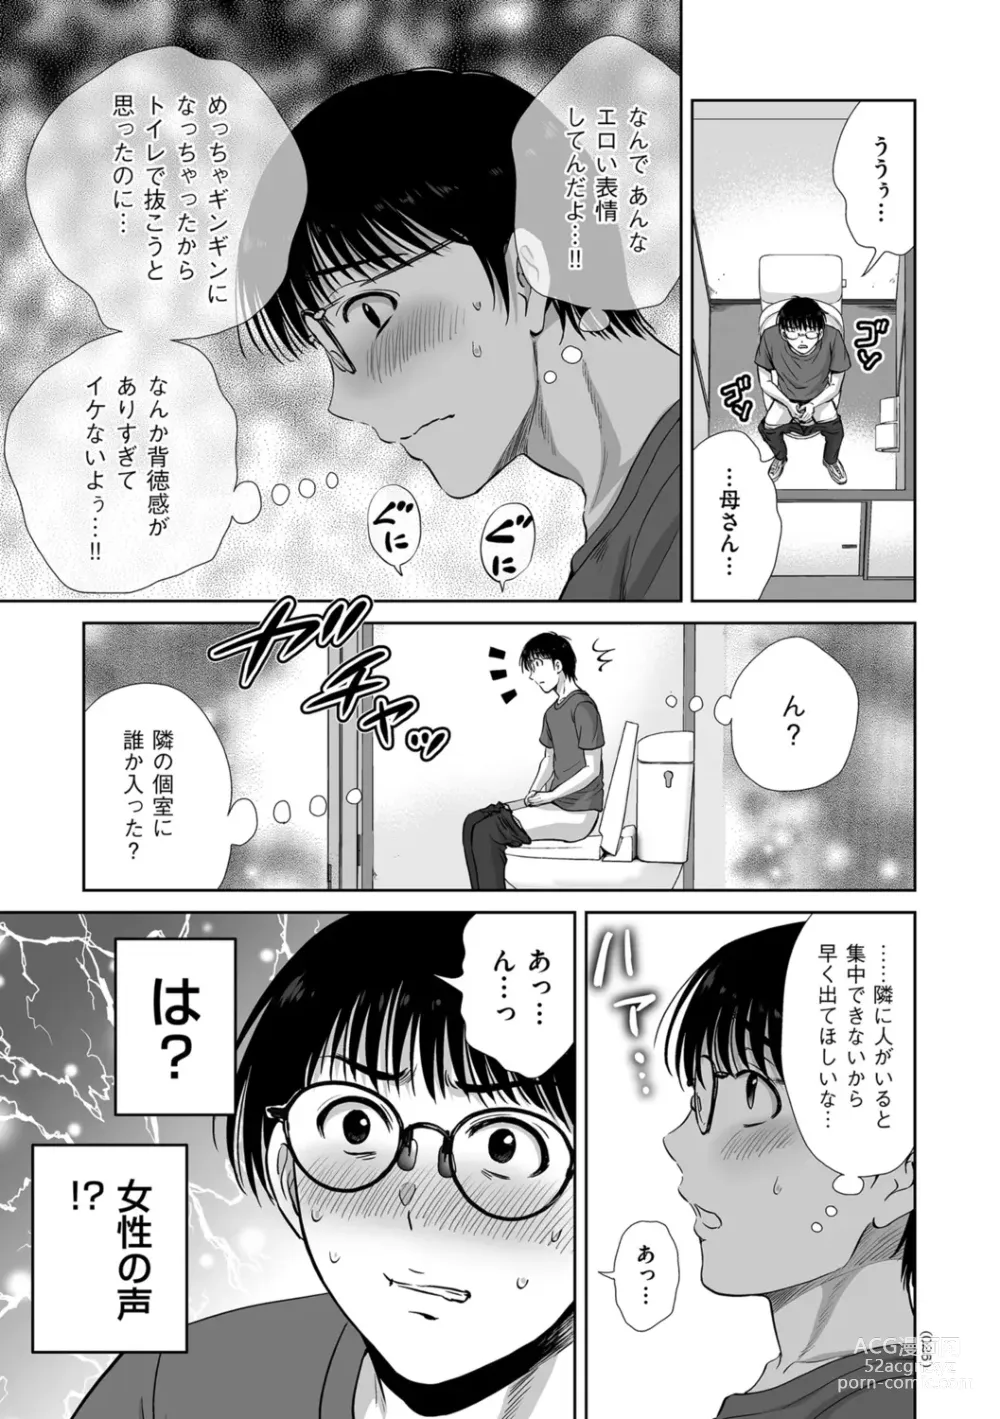 Page 25 of manga Mesuzakari no Haha-tachi e